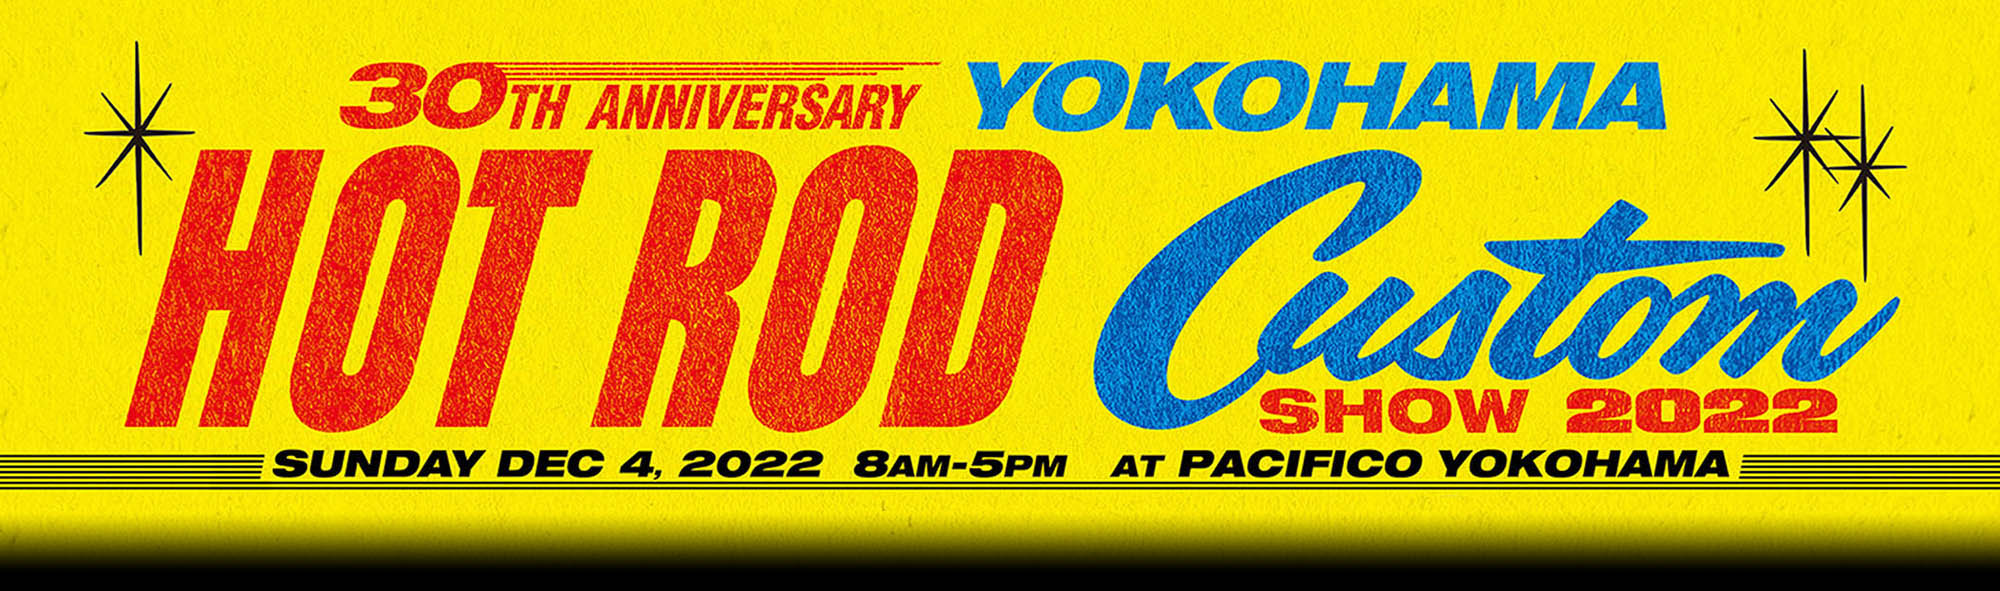 YOKOHAMA HOT ROD CUSTOM SHOW 2022 / ヨコハマホットロッド・カスタムショー2022